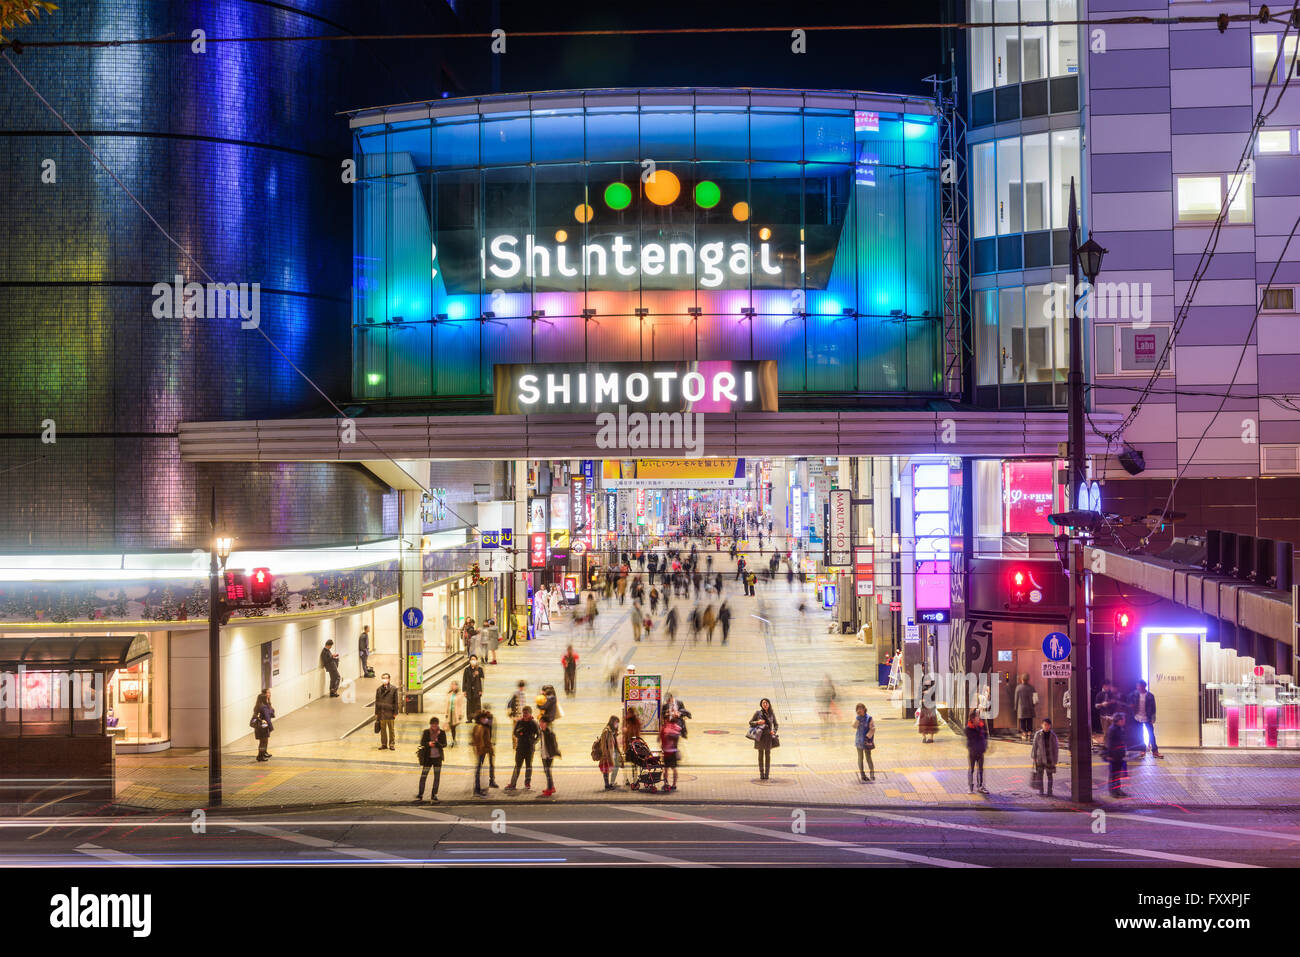 KUMAMOTO, JAPAN - DECEMBER 8, 2015: The Shintengai Shimotori Shopping arcade at night. It is the largest shopping arcade in Kuma Stock Photo